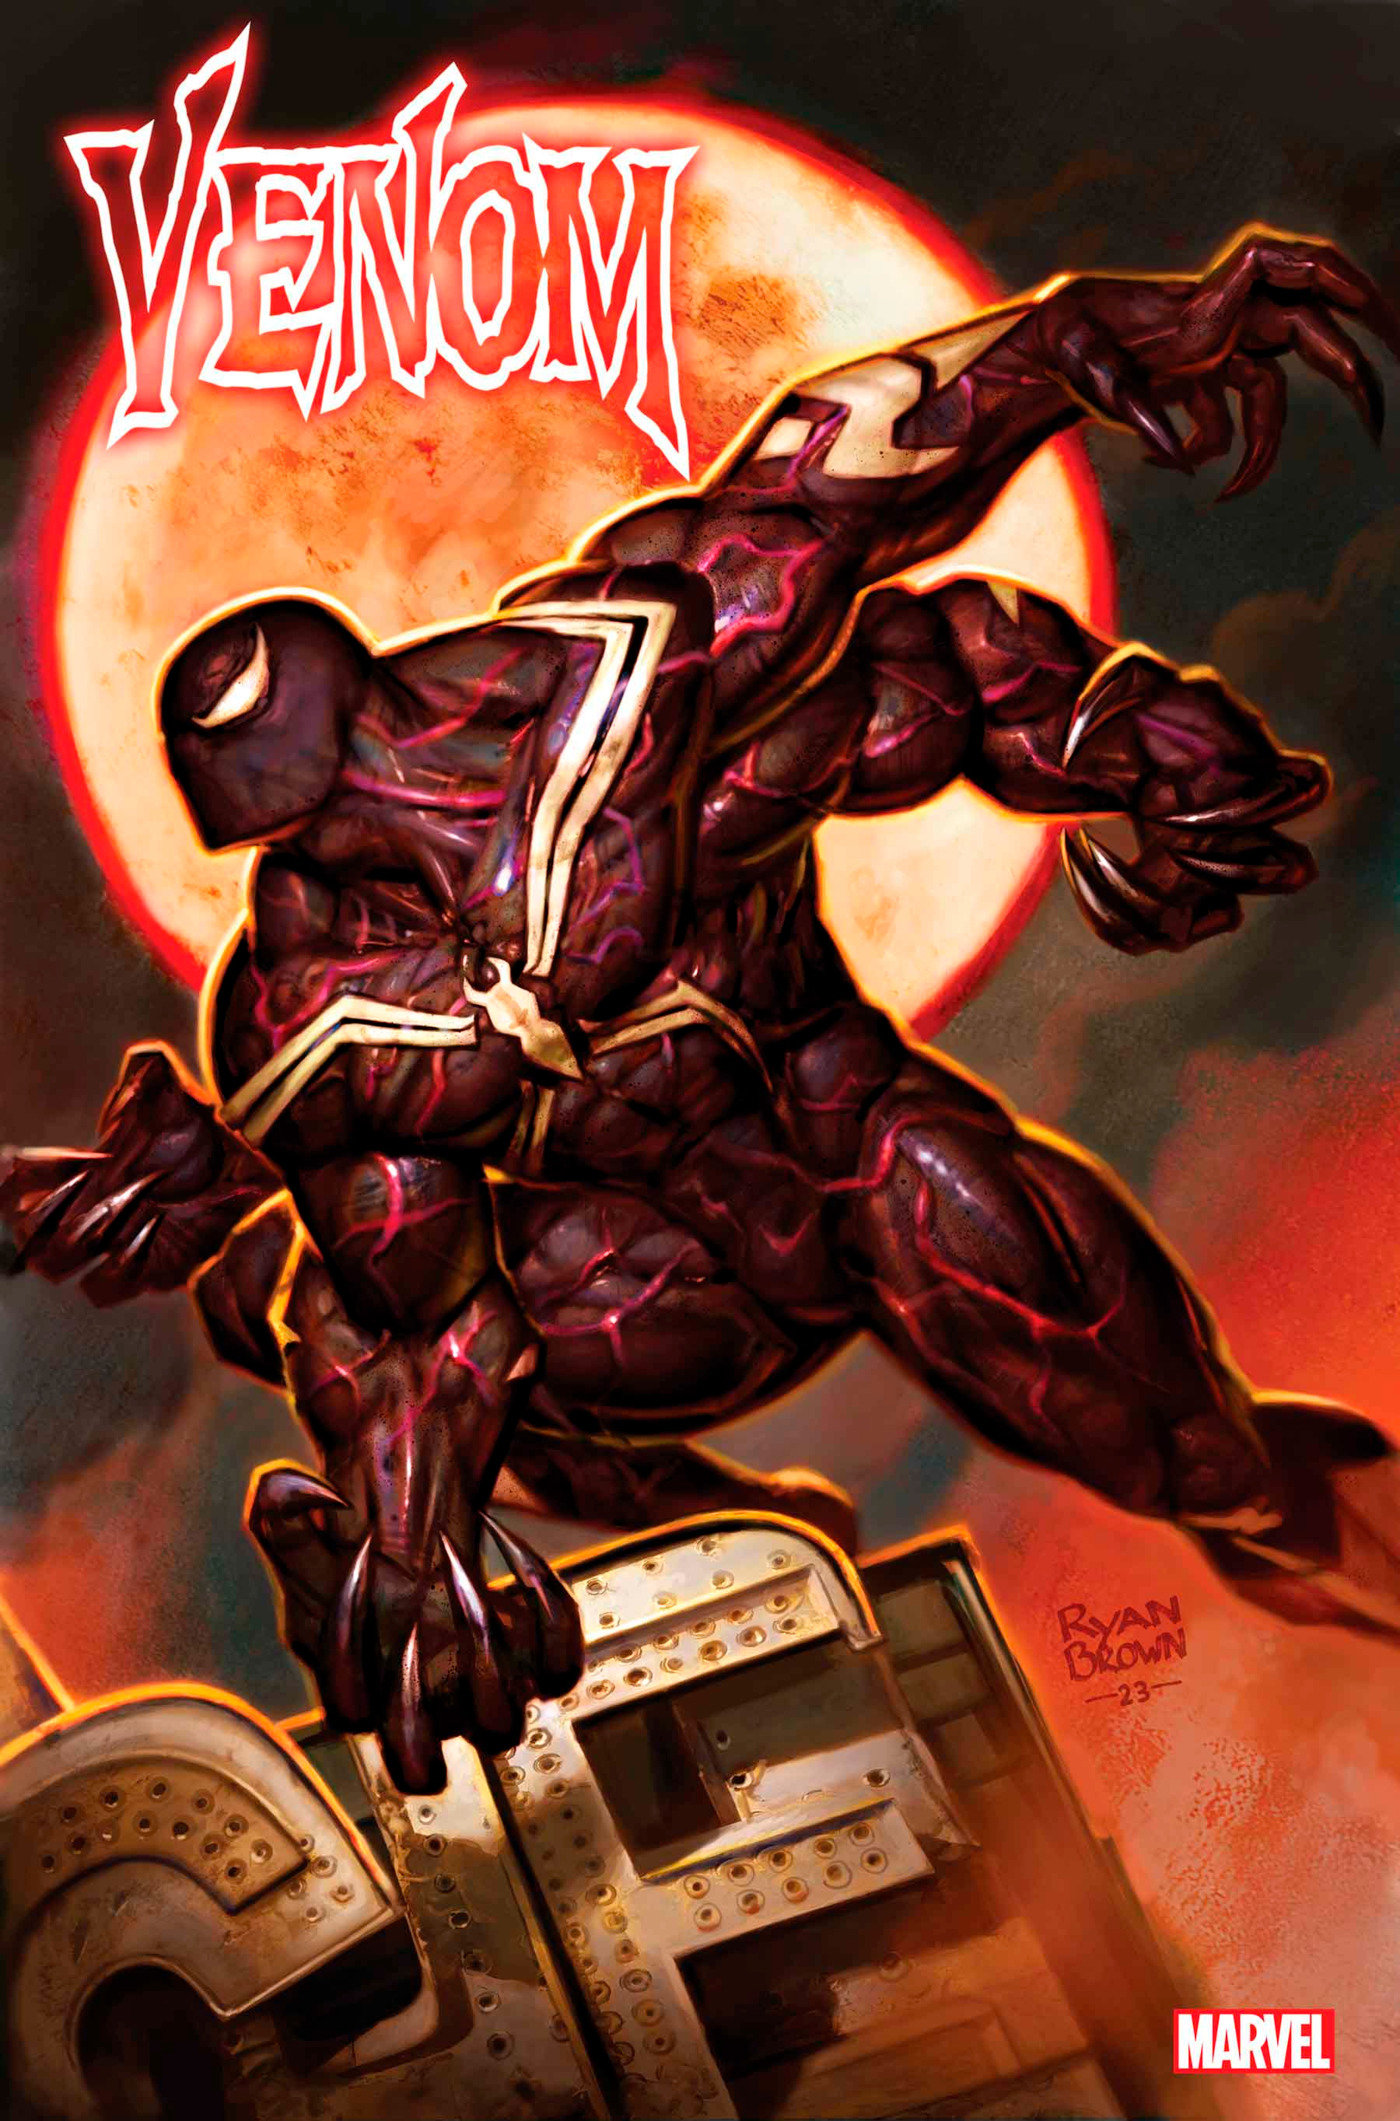 Venom #23 Ryan Brown 1 for 25 Incentive Variant